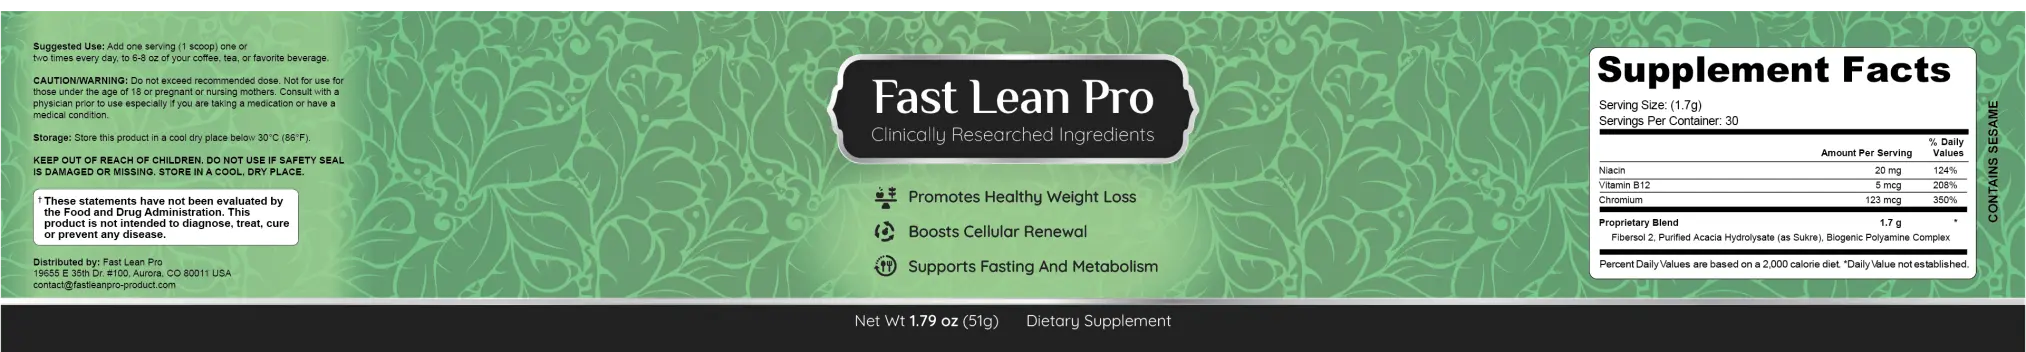 Fast Lean Pro Label